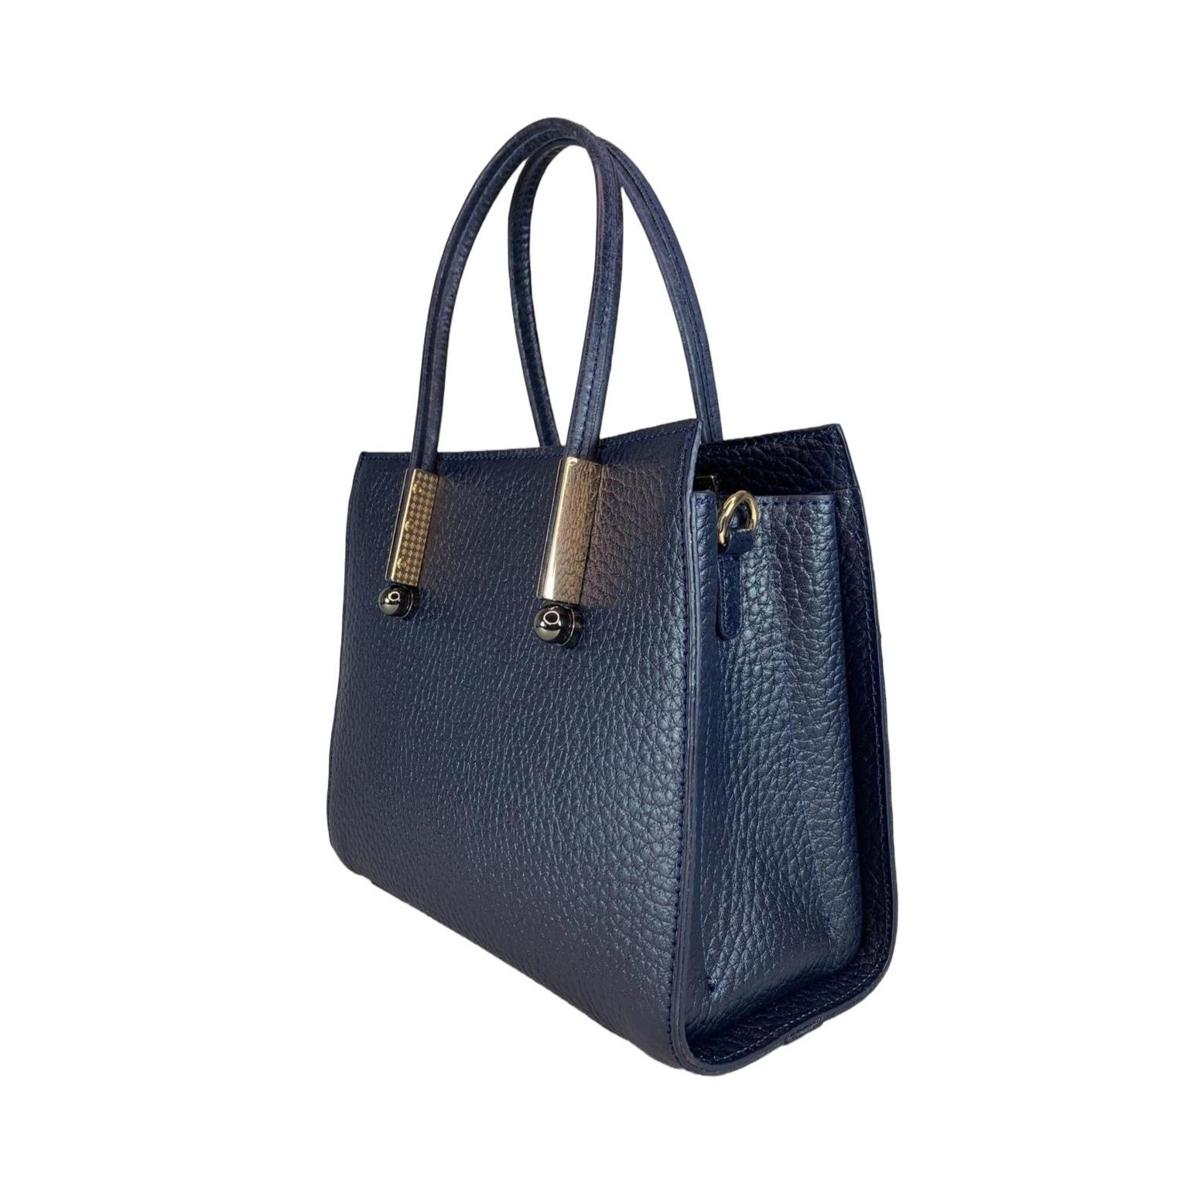 Crossbody Purses for Women, Medium Size Zipper Pocket Adjustable Strap,  Soft Leather Women's Shoulder Handbags Gift - Navy Blue - Walmart.com